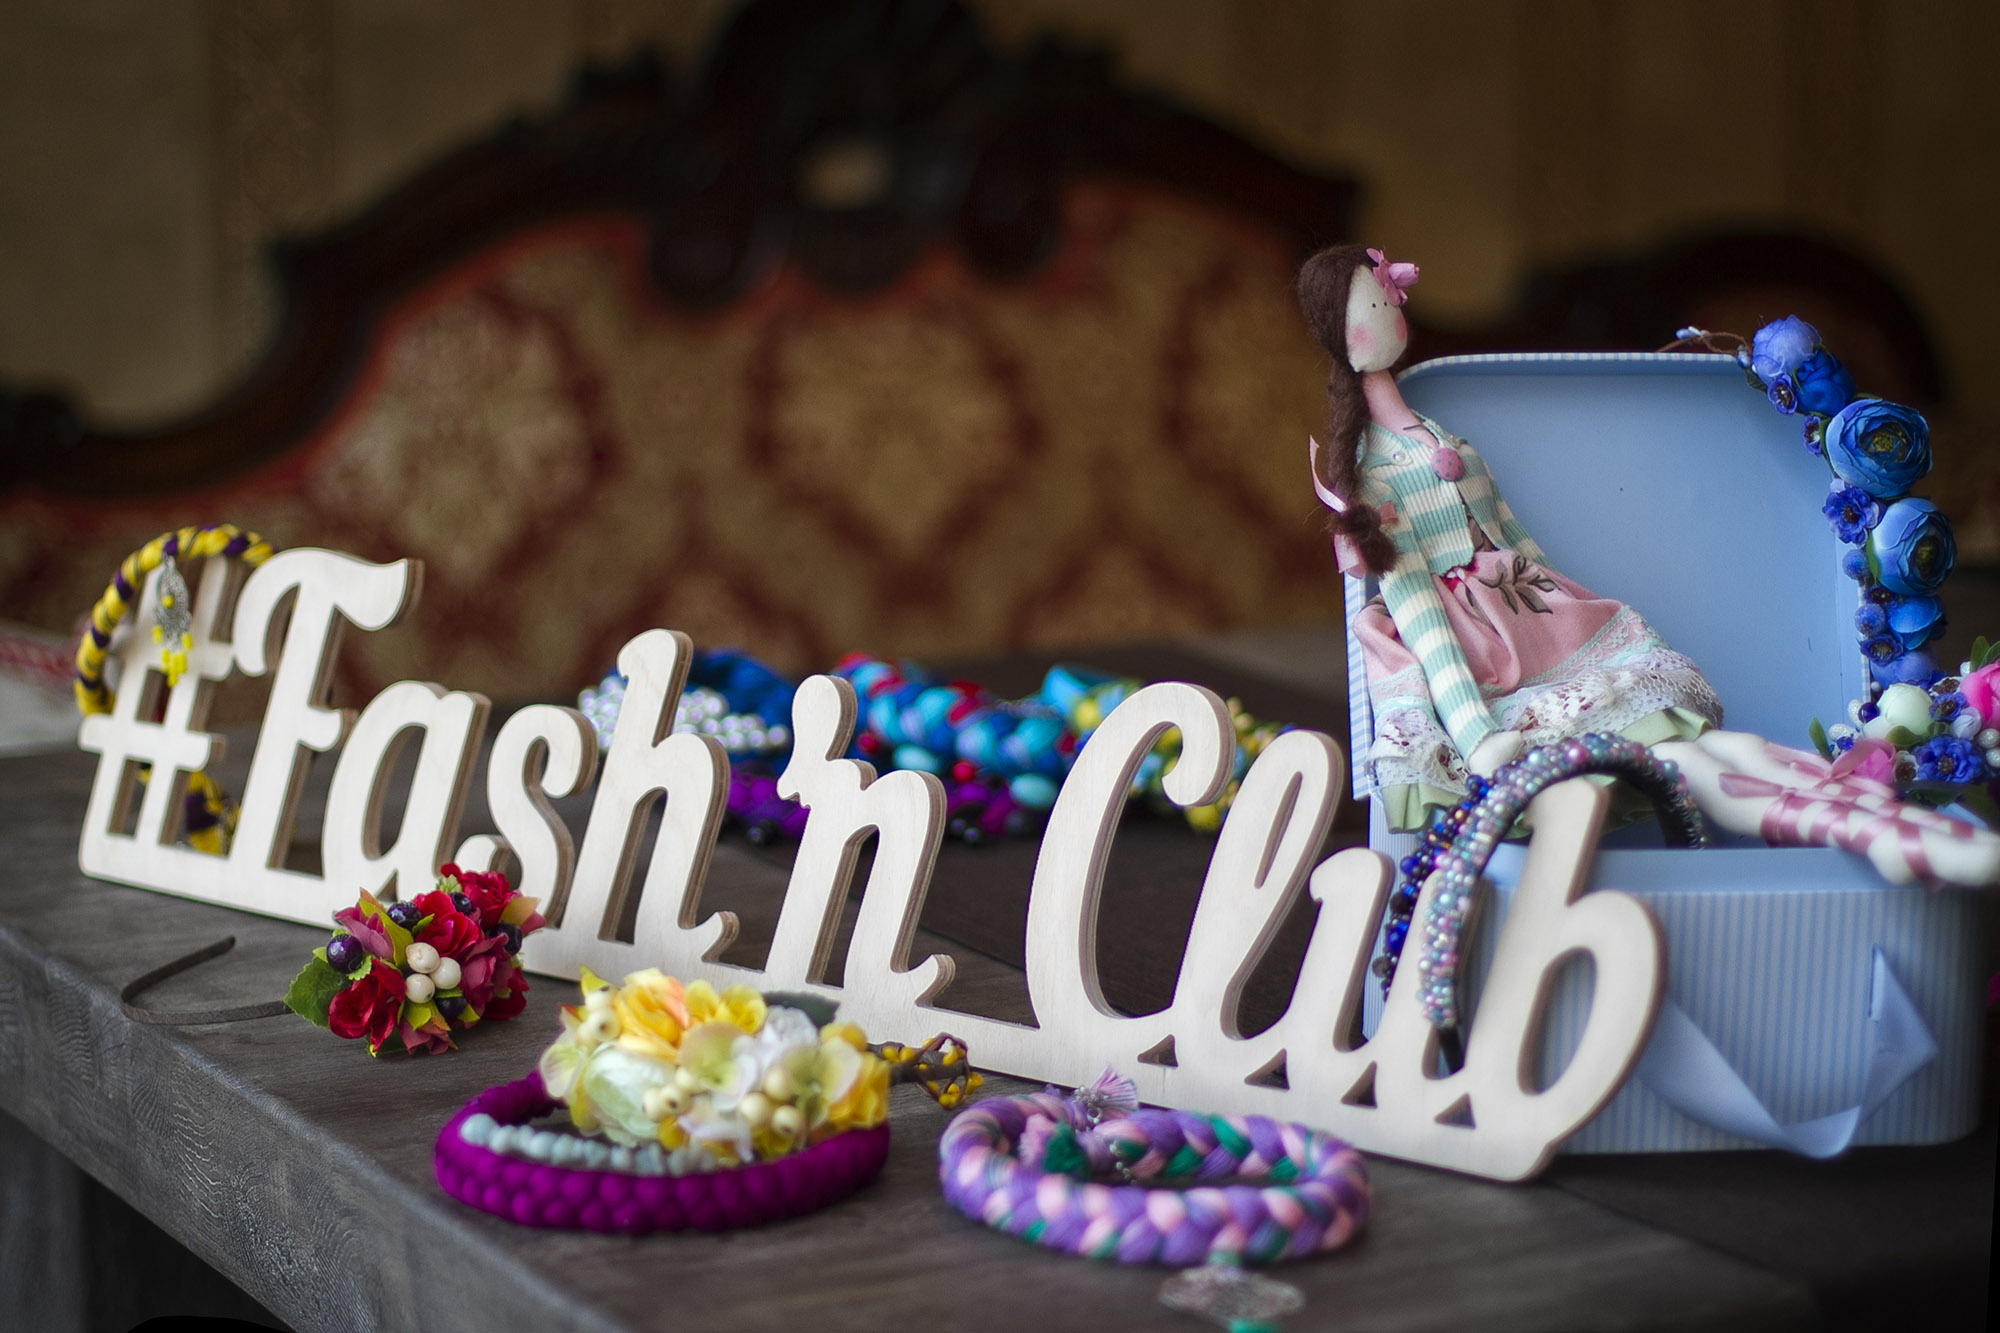 Fashion accessories with hashtag Fash'n Club